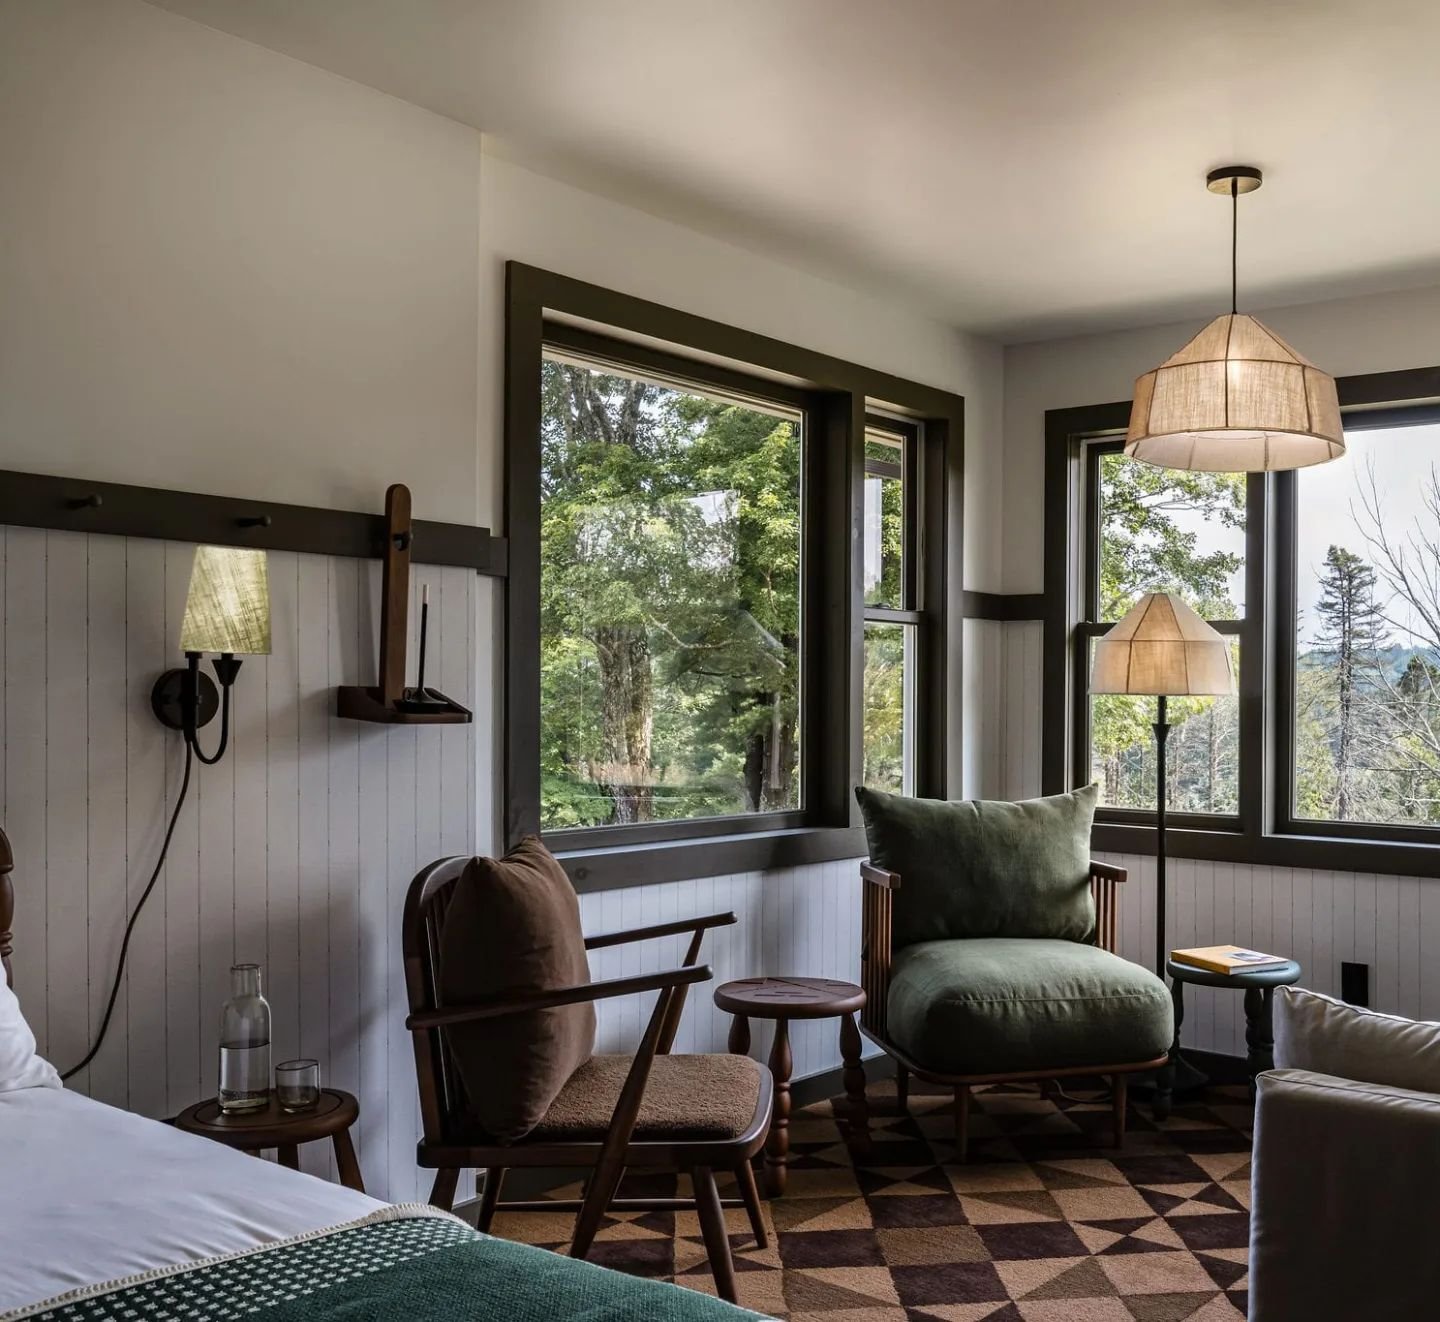 Our spacious Hemlock King suite with cozy seating and nature views. 🌳
#hemlockneversink 

Photo by: @lwrncbrn